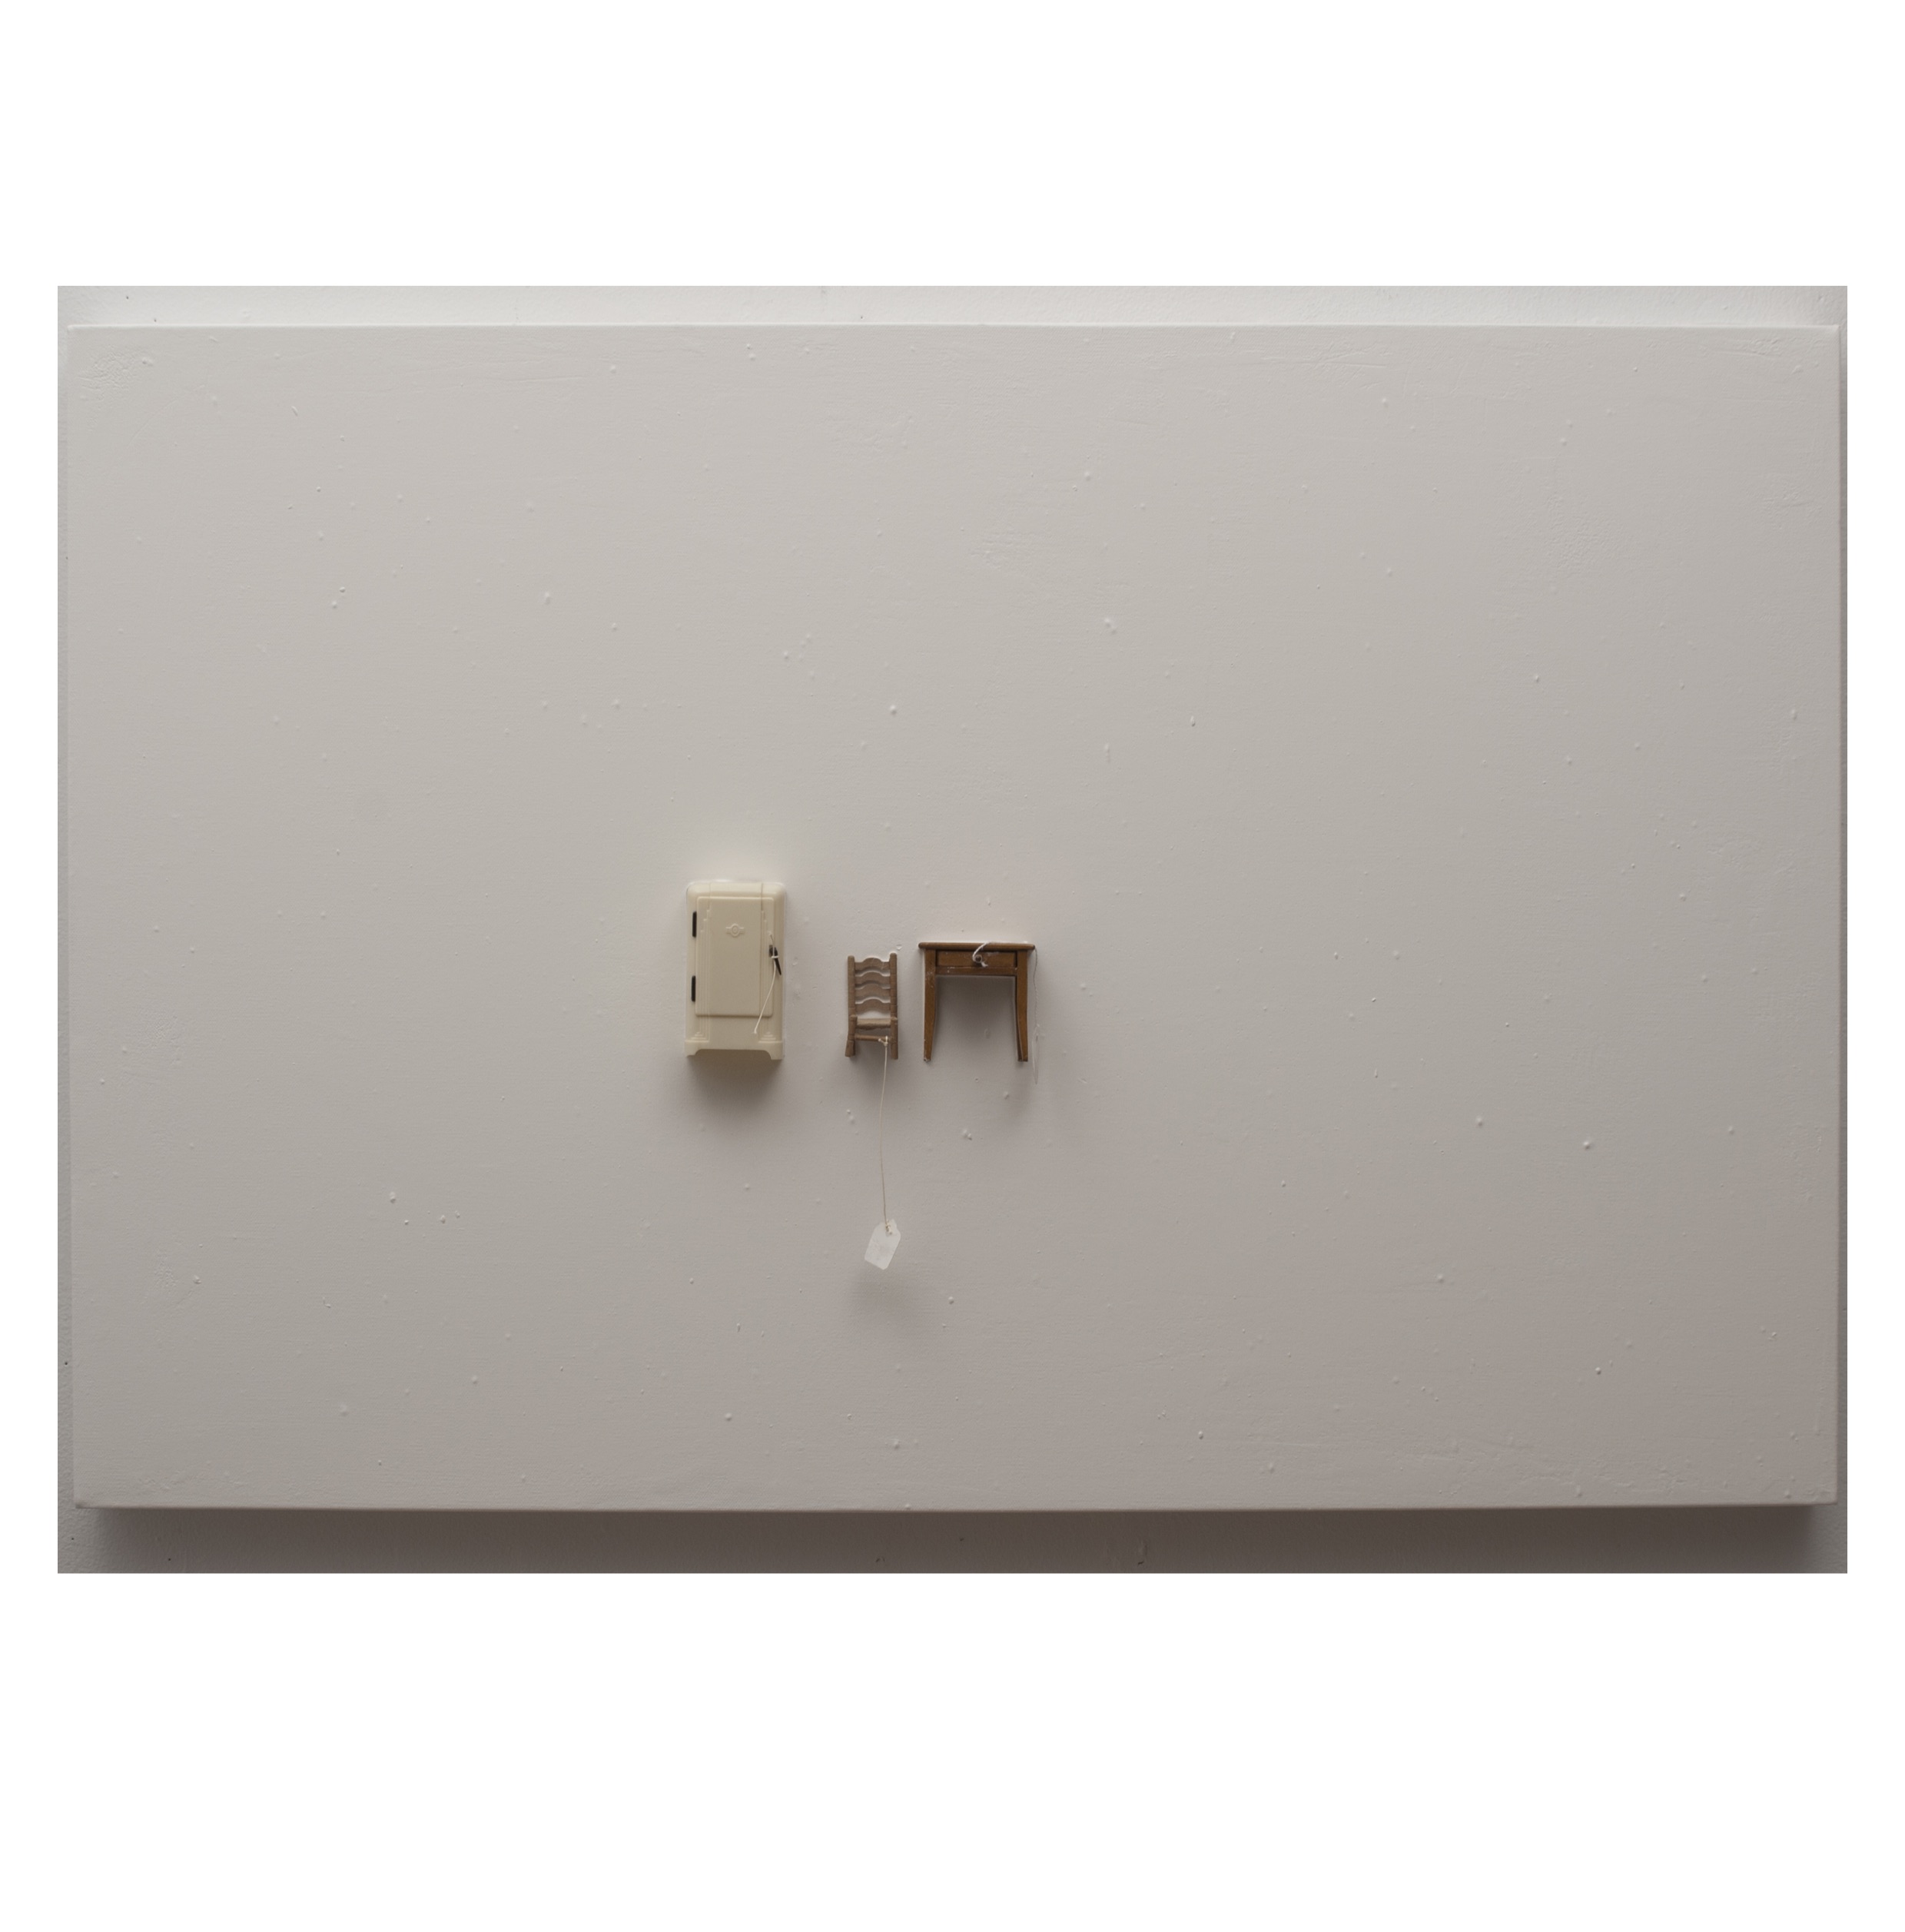 Liliana Porter - For Sale (Refrigerator, chair and Table). 2018. Acrilico y ensamblaje sobre lienzo. 71 x 91,4 x 8,9 cm.